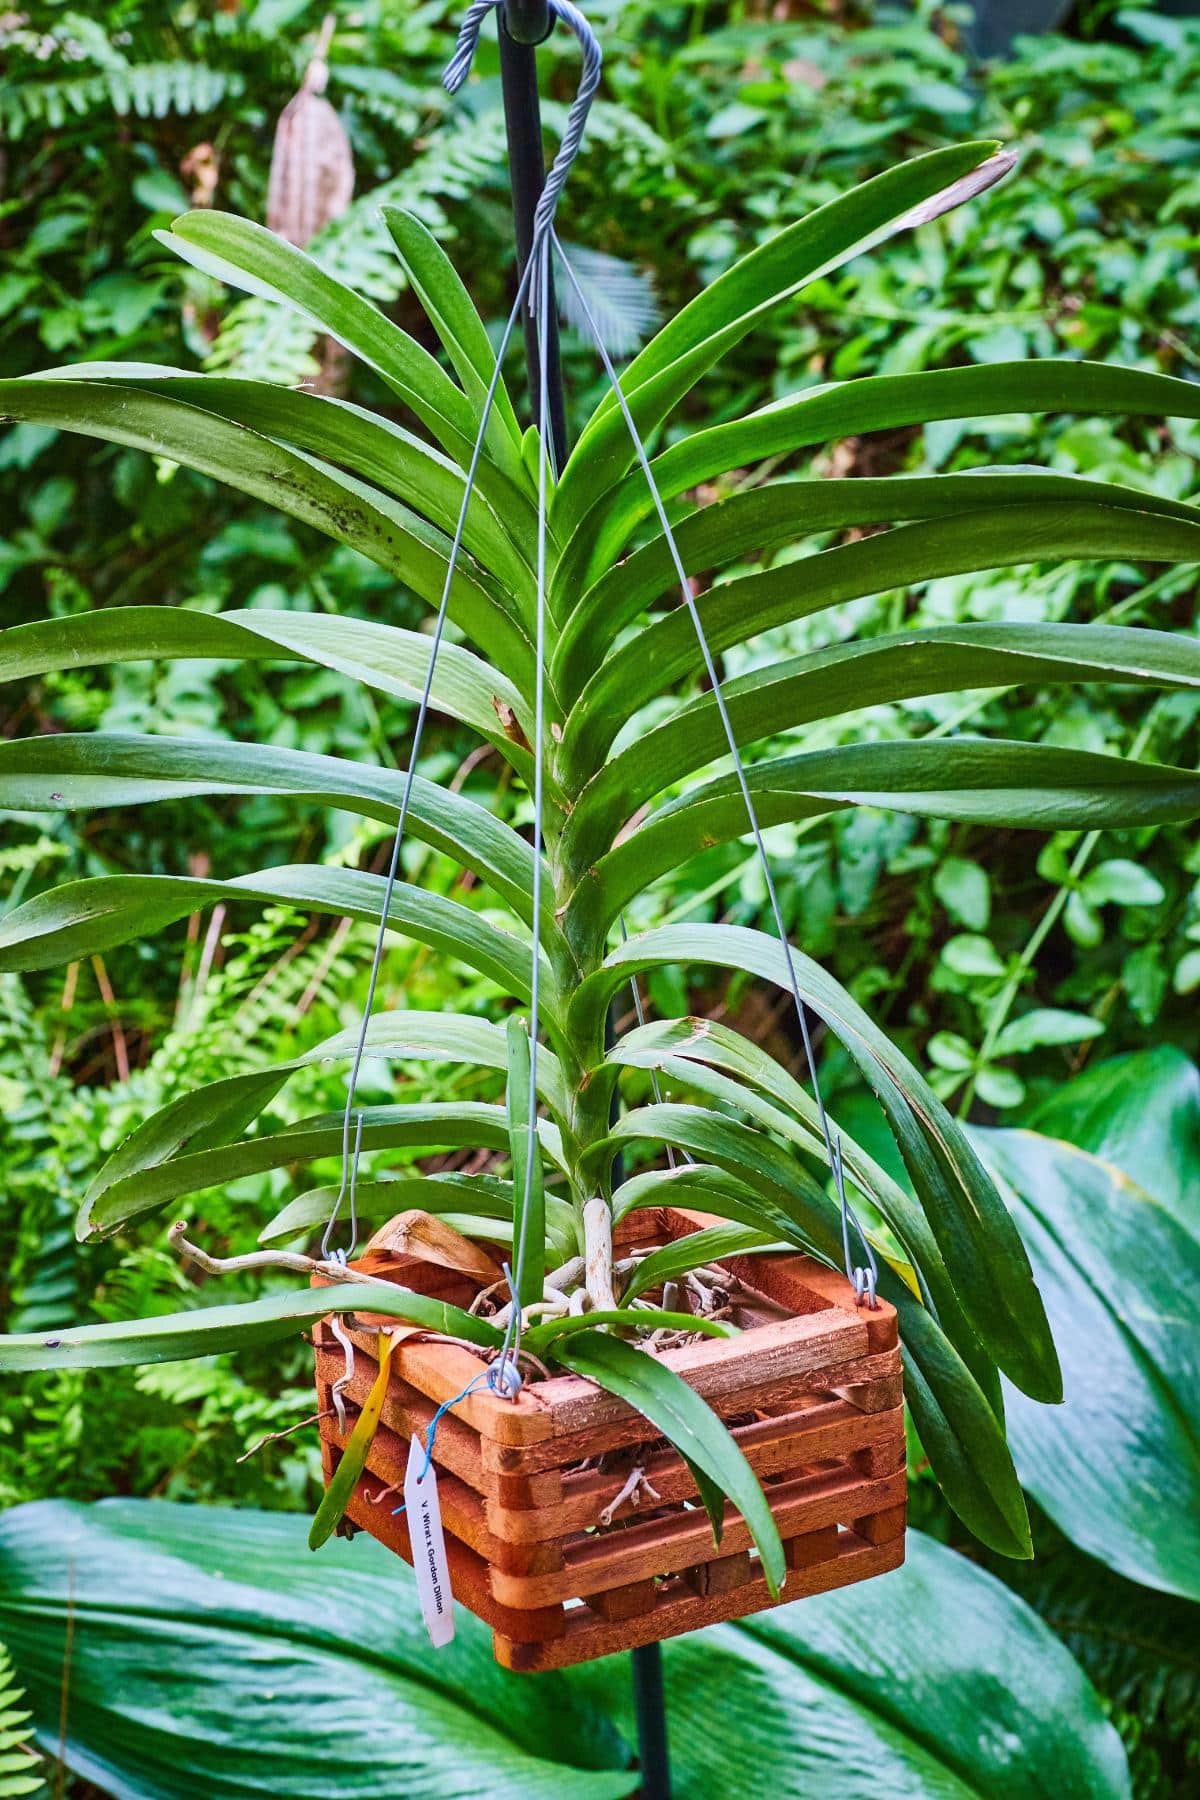 Vanda orchids in slotted wood basket